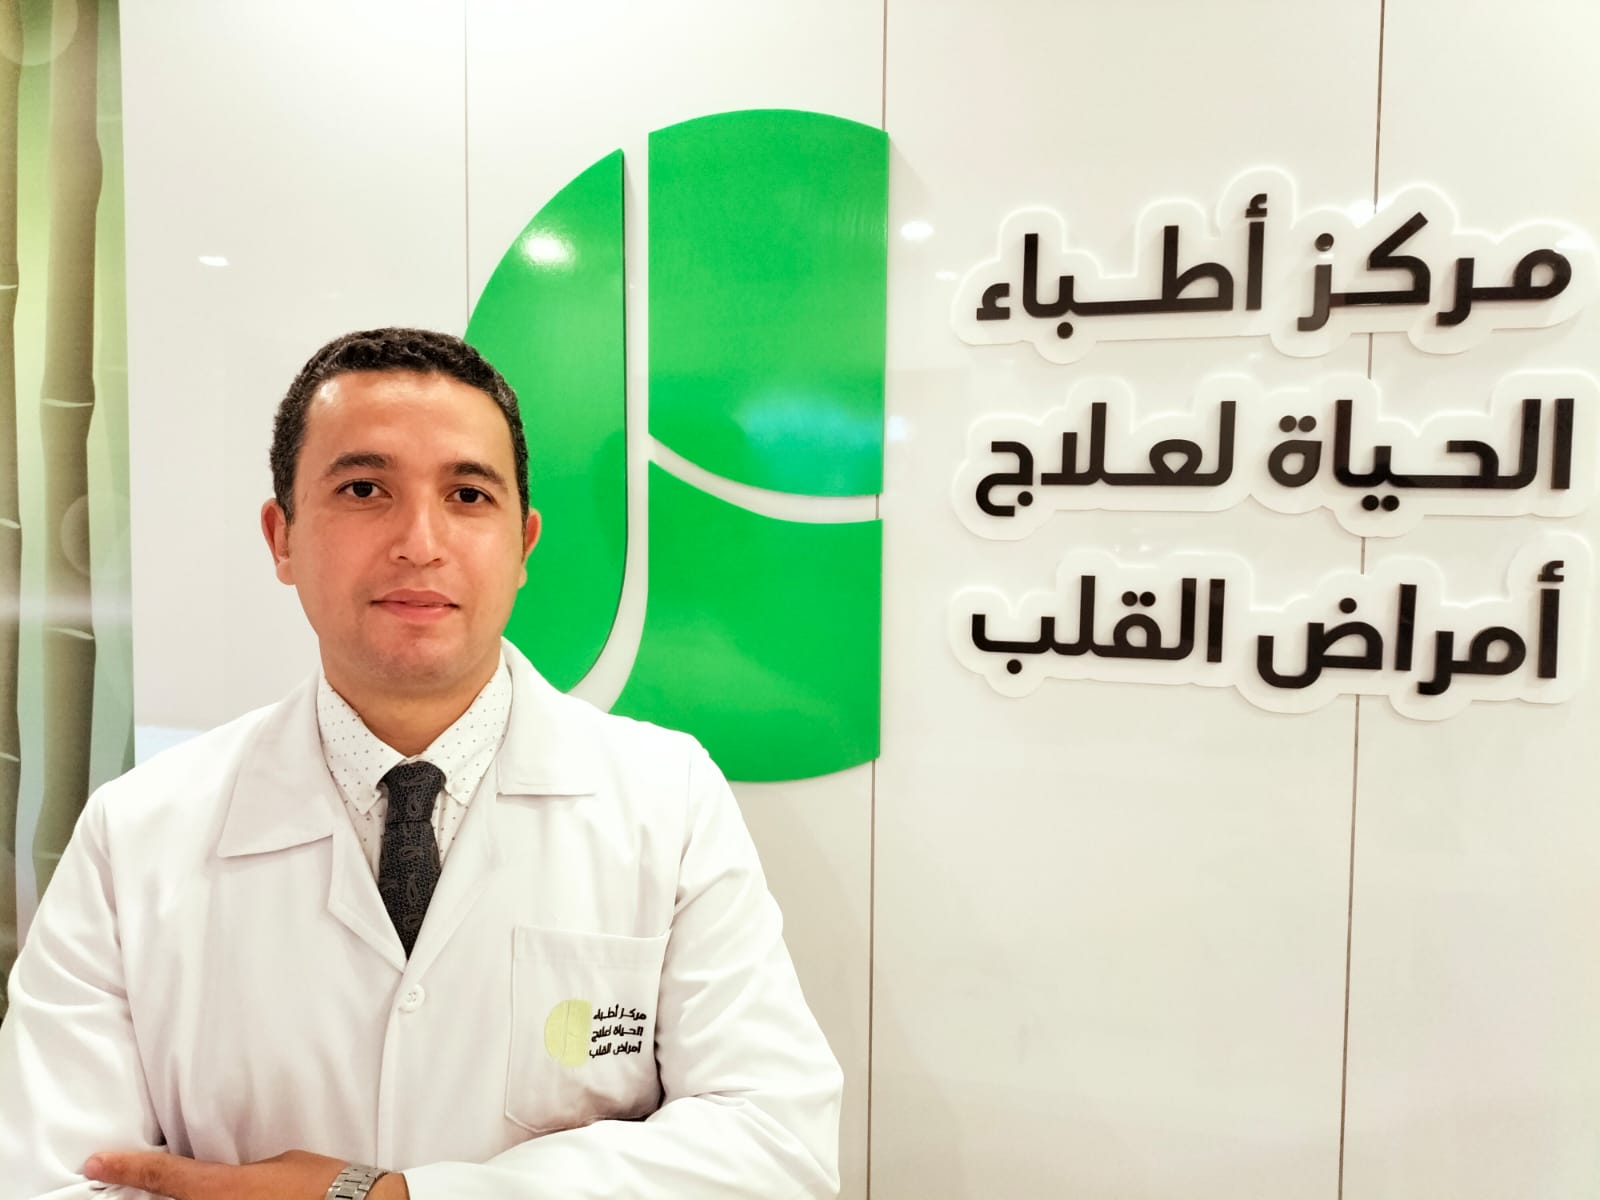 Dr. Amir Mostafa Abdel Hameed